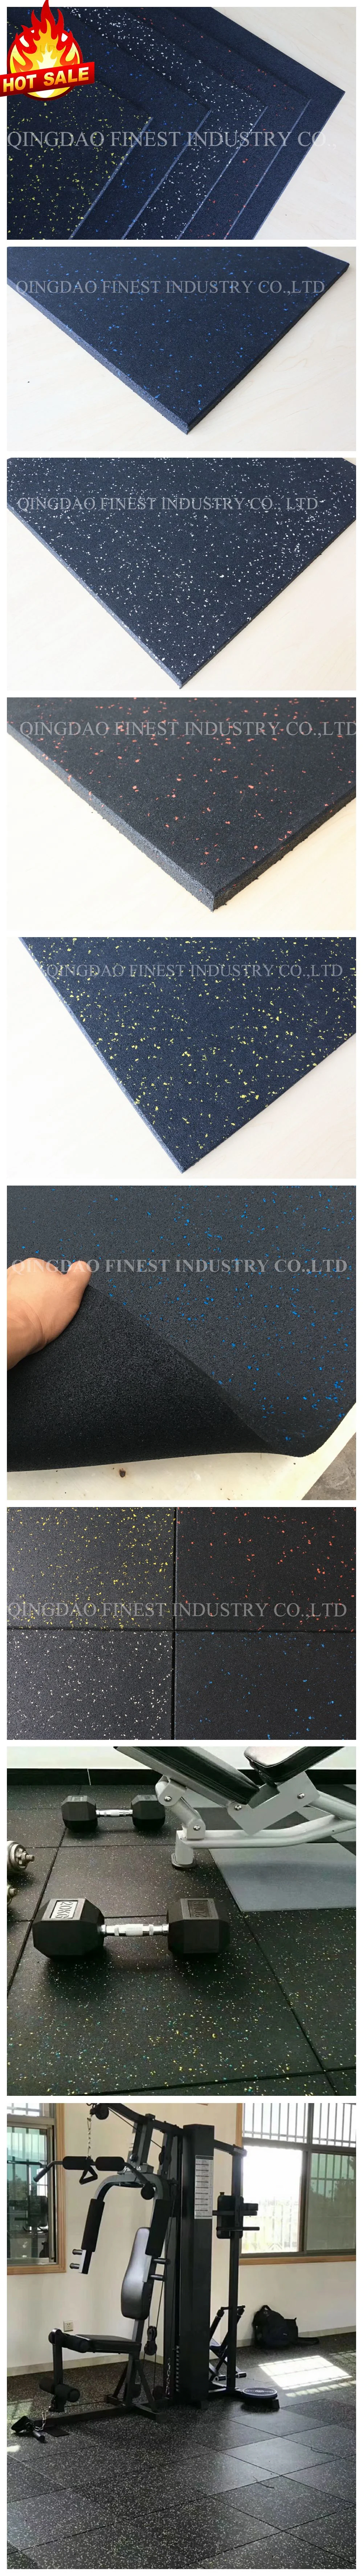 China Premium Commercial Rubber Gym Floor Mat Tiles, Home Fitness Heavy Duty Rubber Flooring Tiles Mat